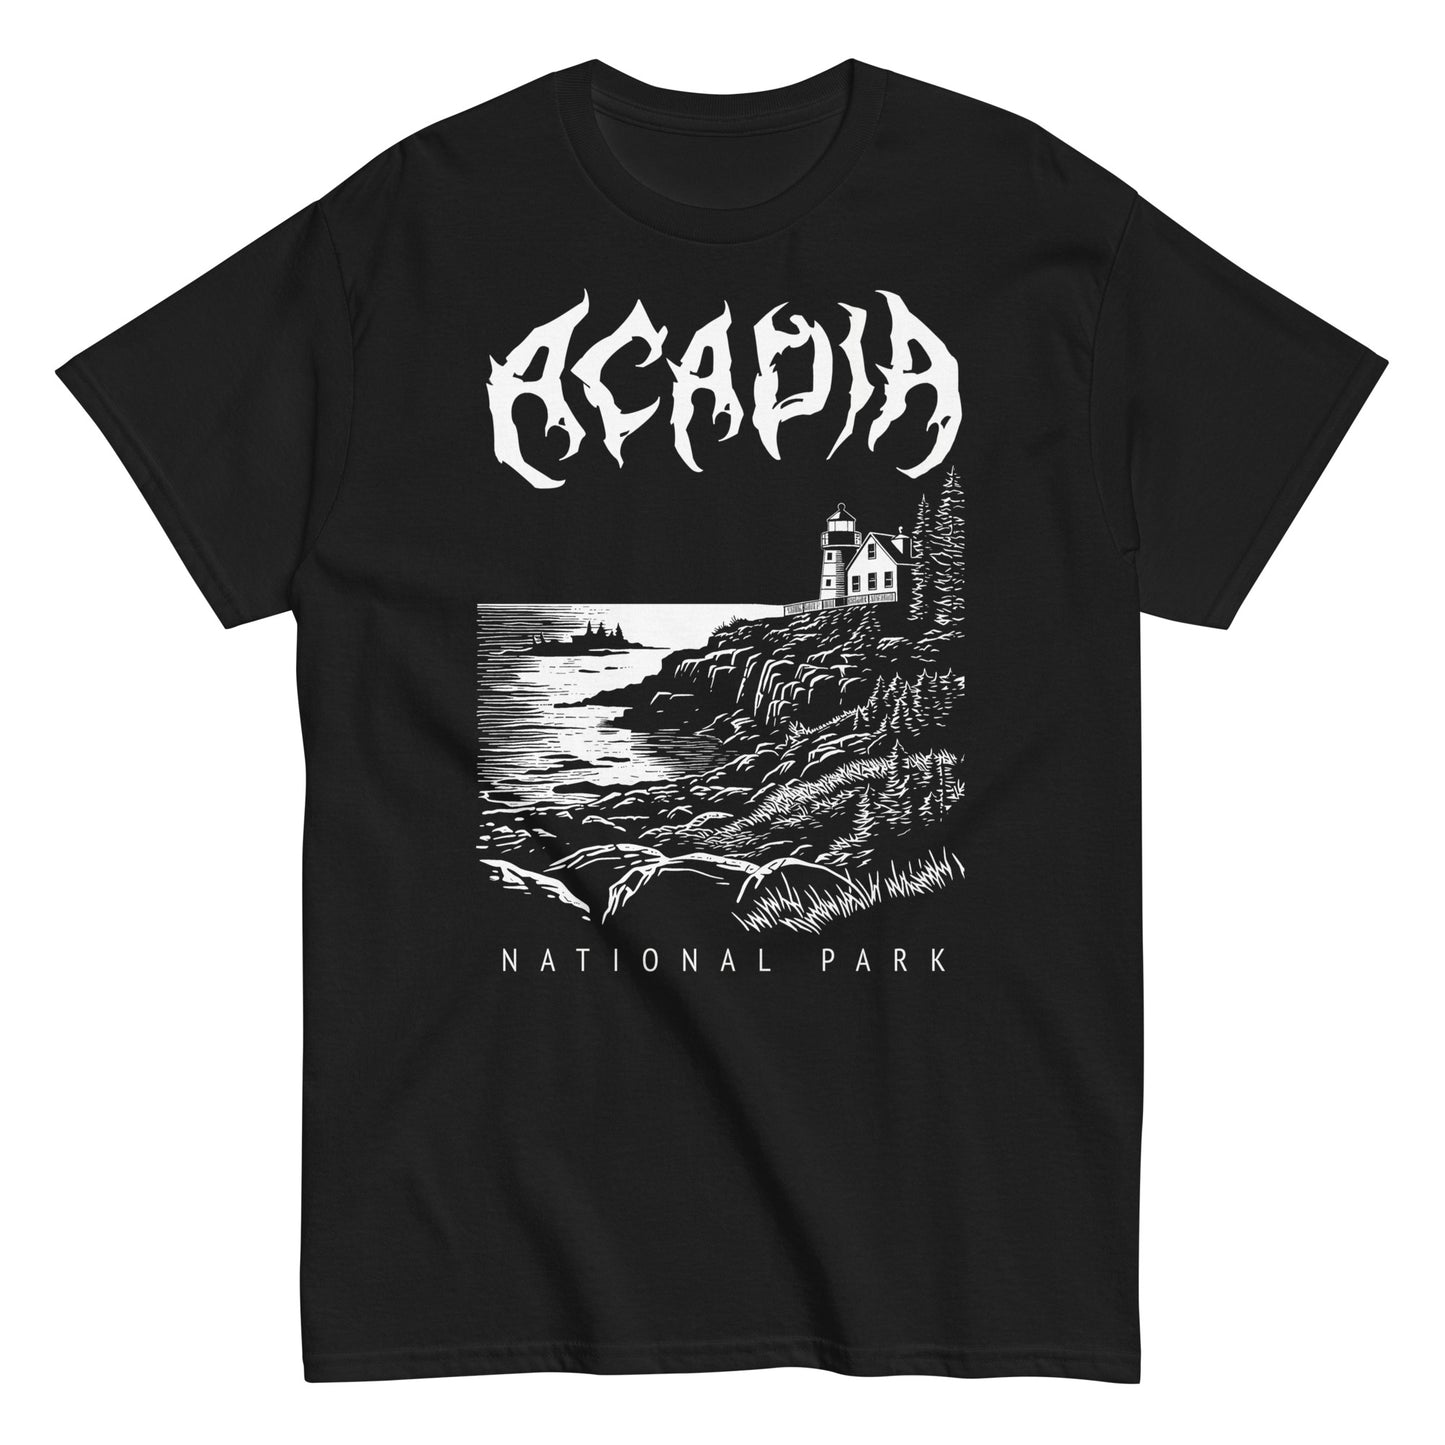 Acadia National Park Death Metal Style Short Sleeve Black Tee